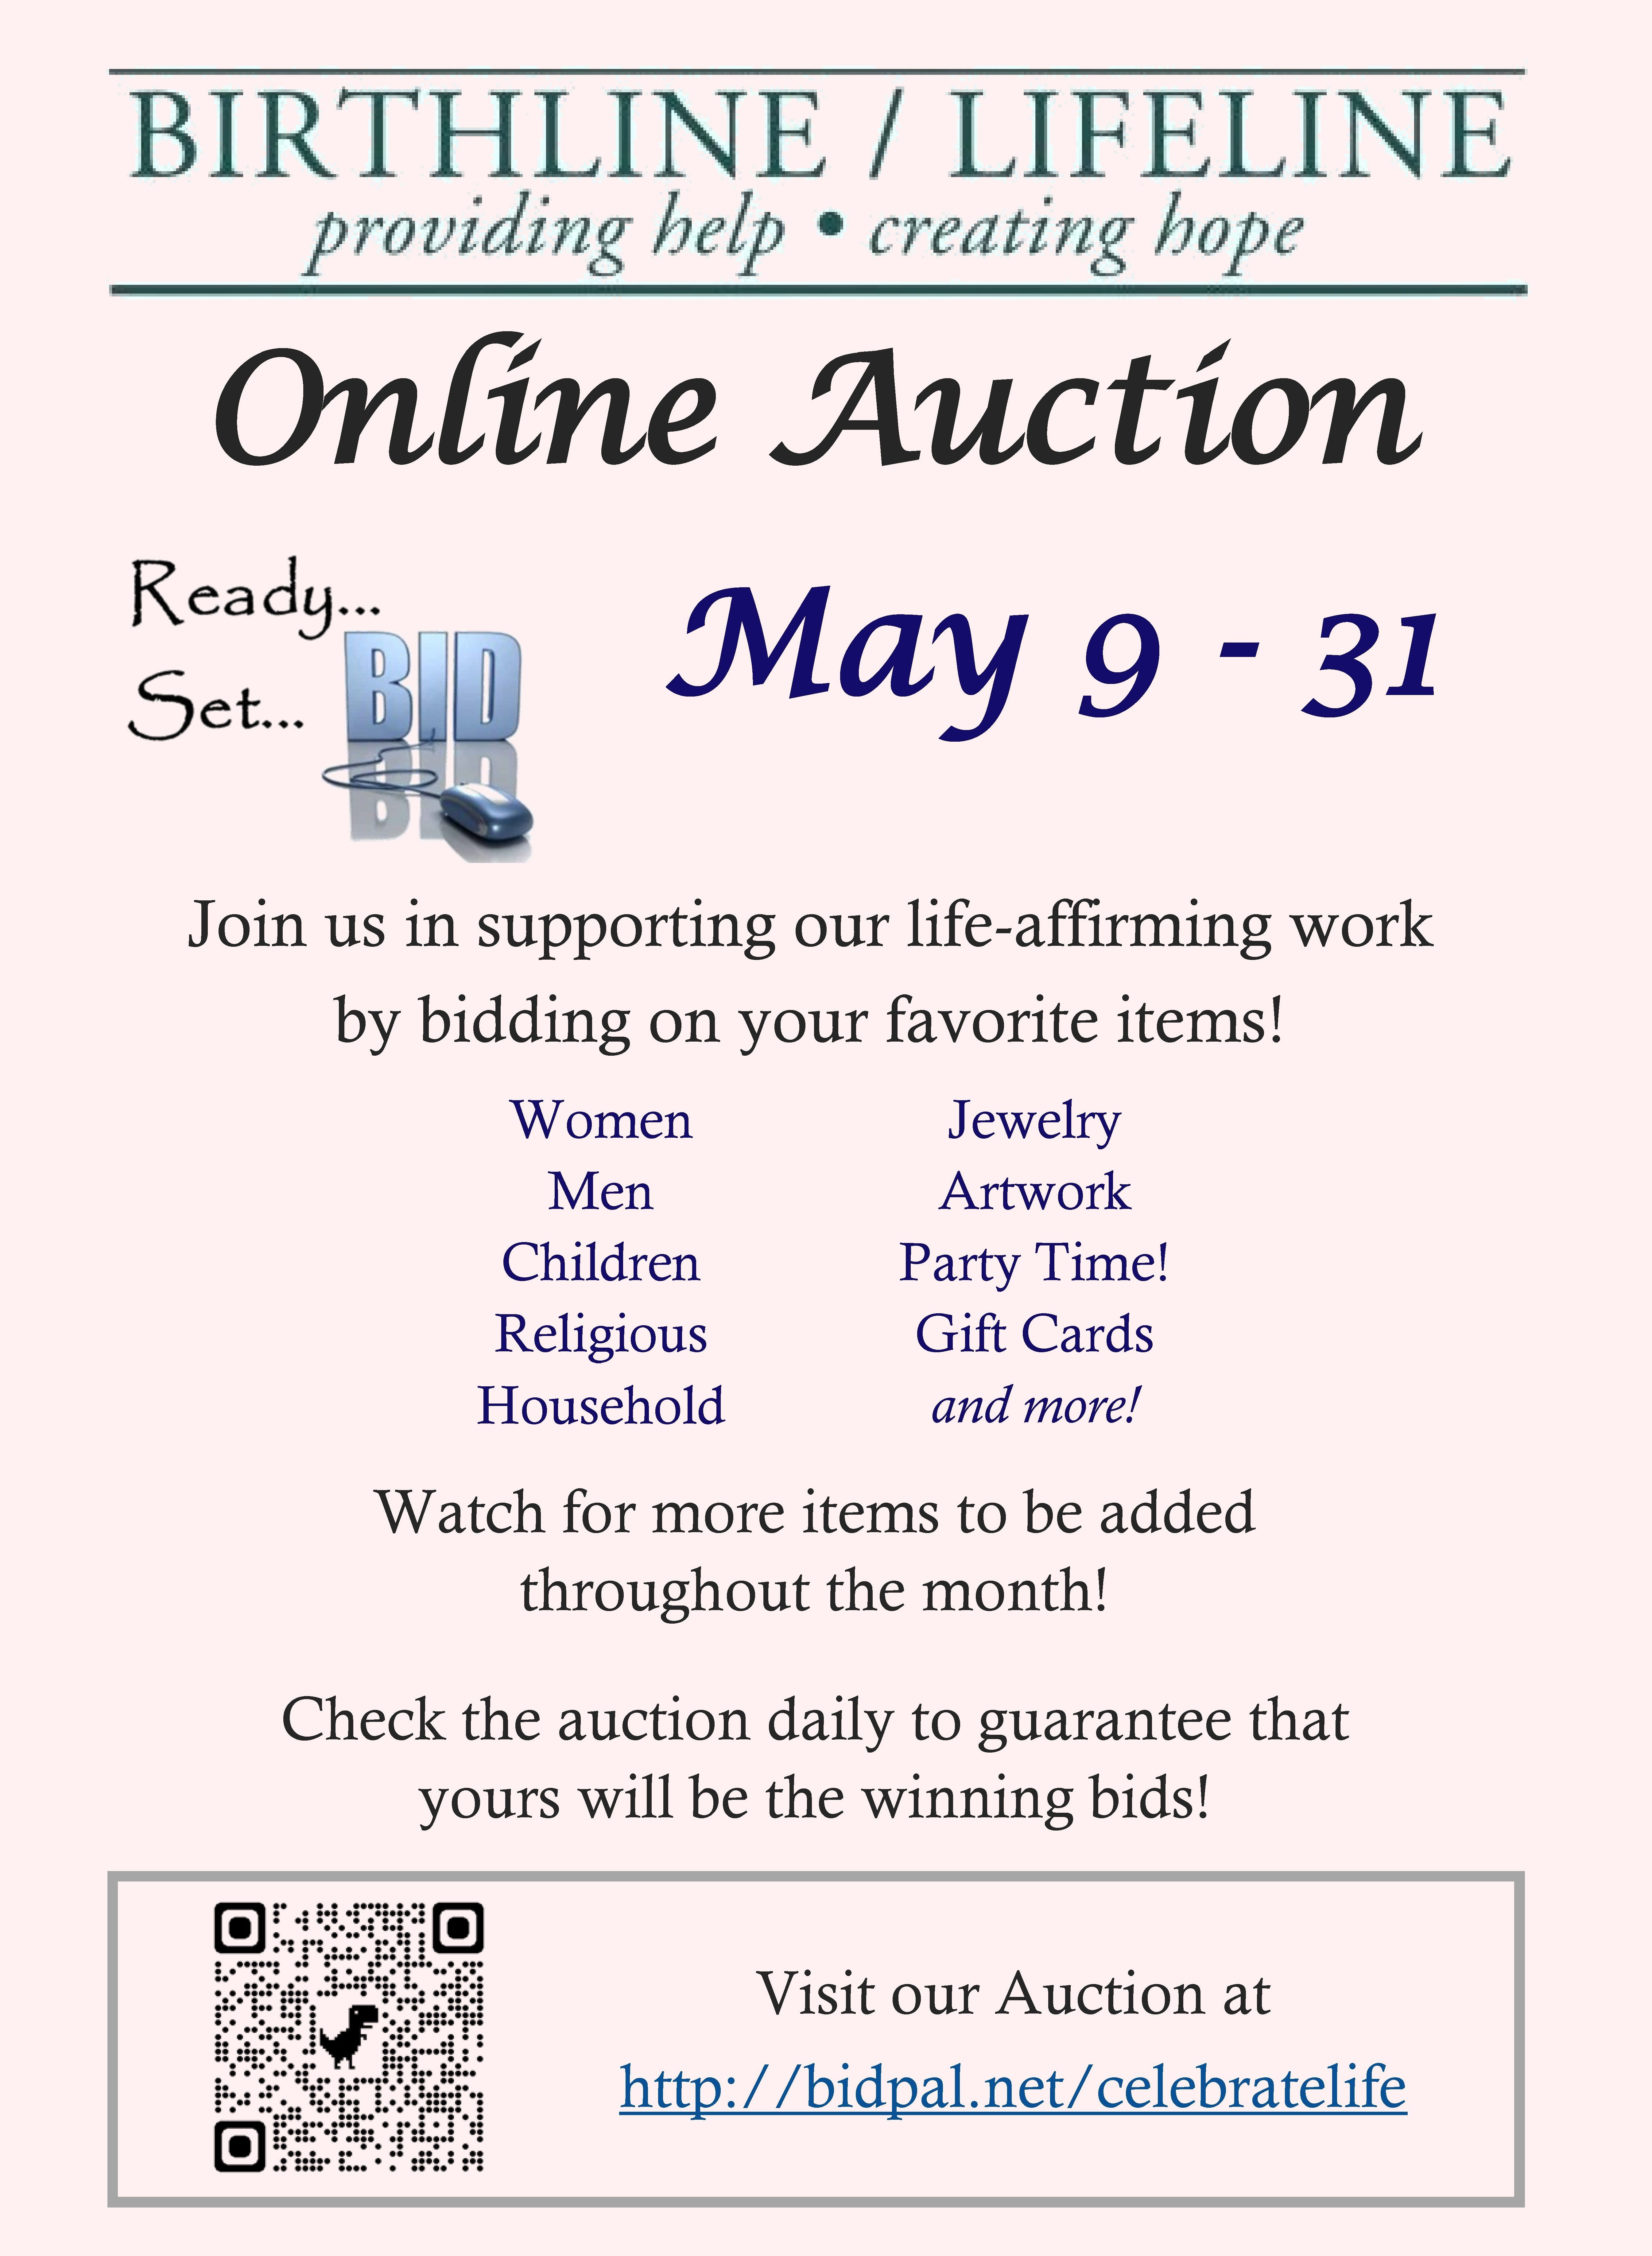 Catholic Charities Celebrate Life Online Auction